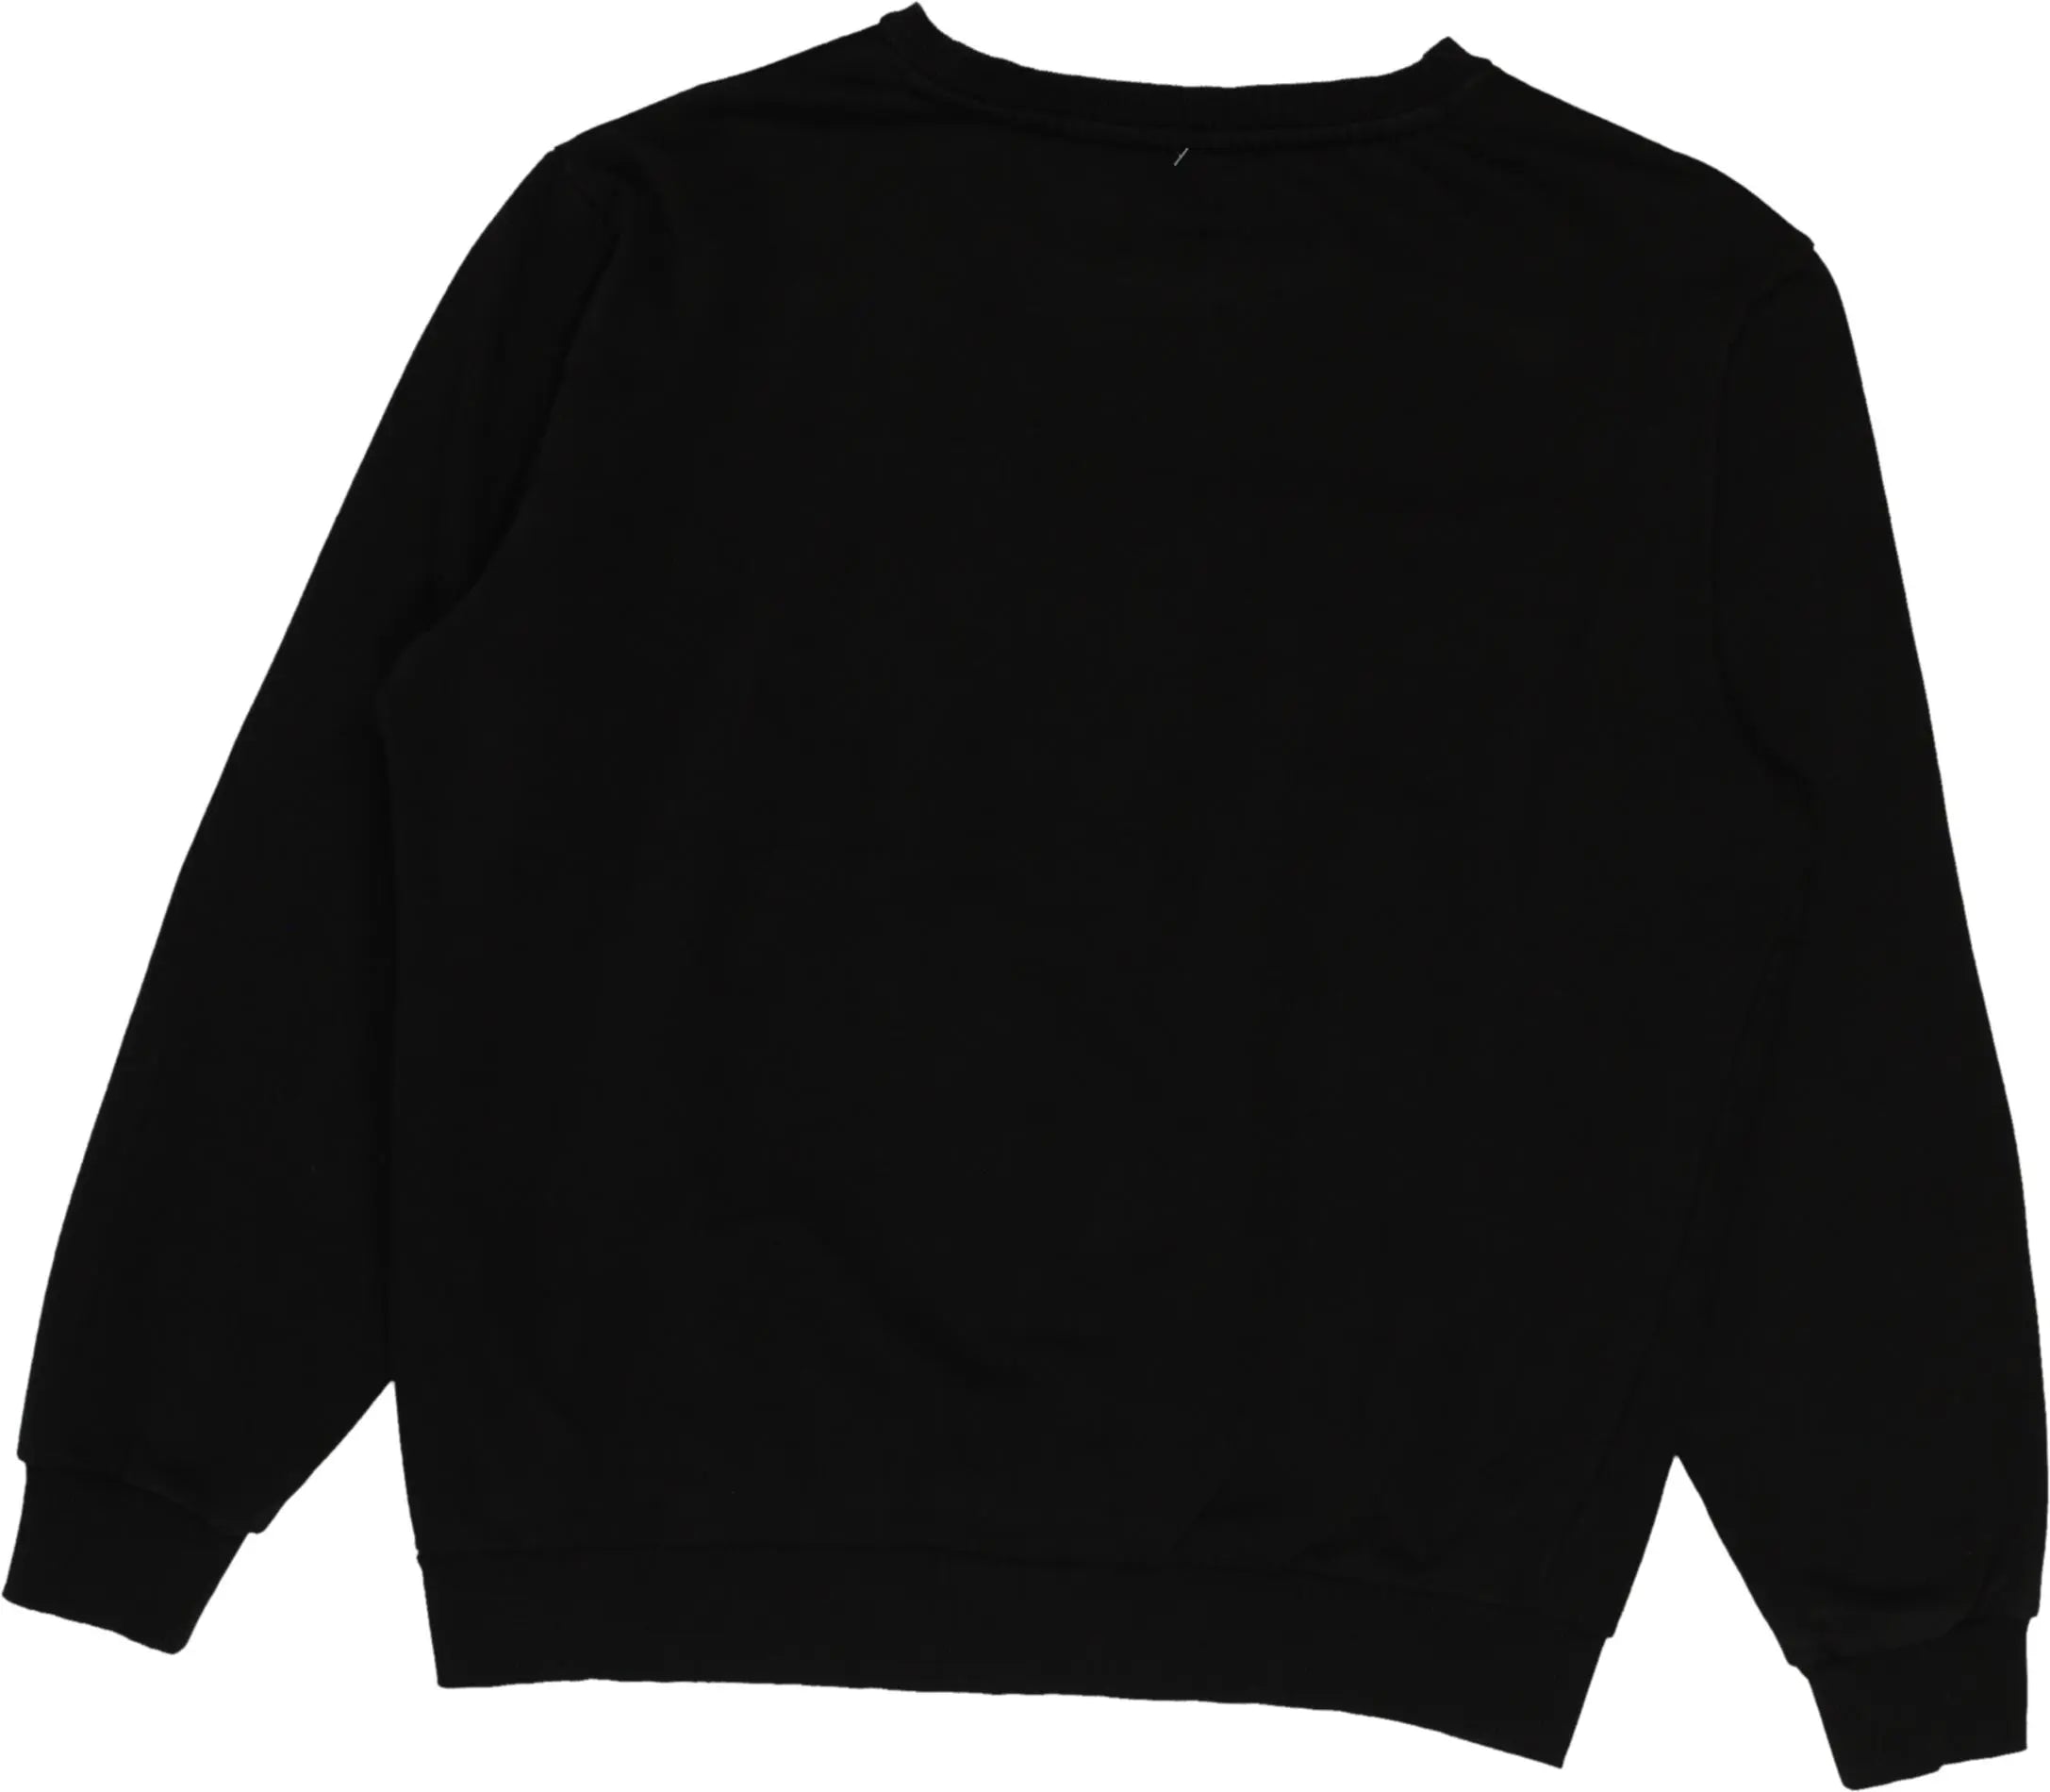 Puma - Black Puma sweater- ThriftTale.com - Vintage and second handclothing